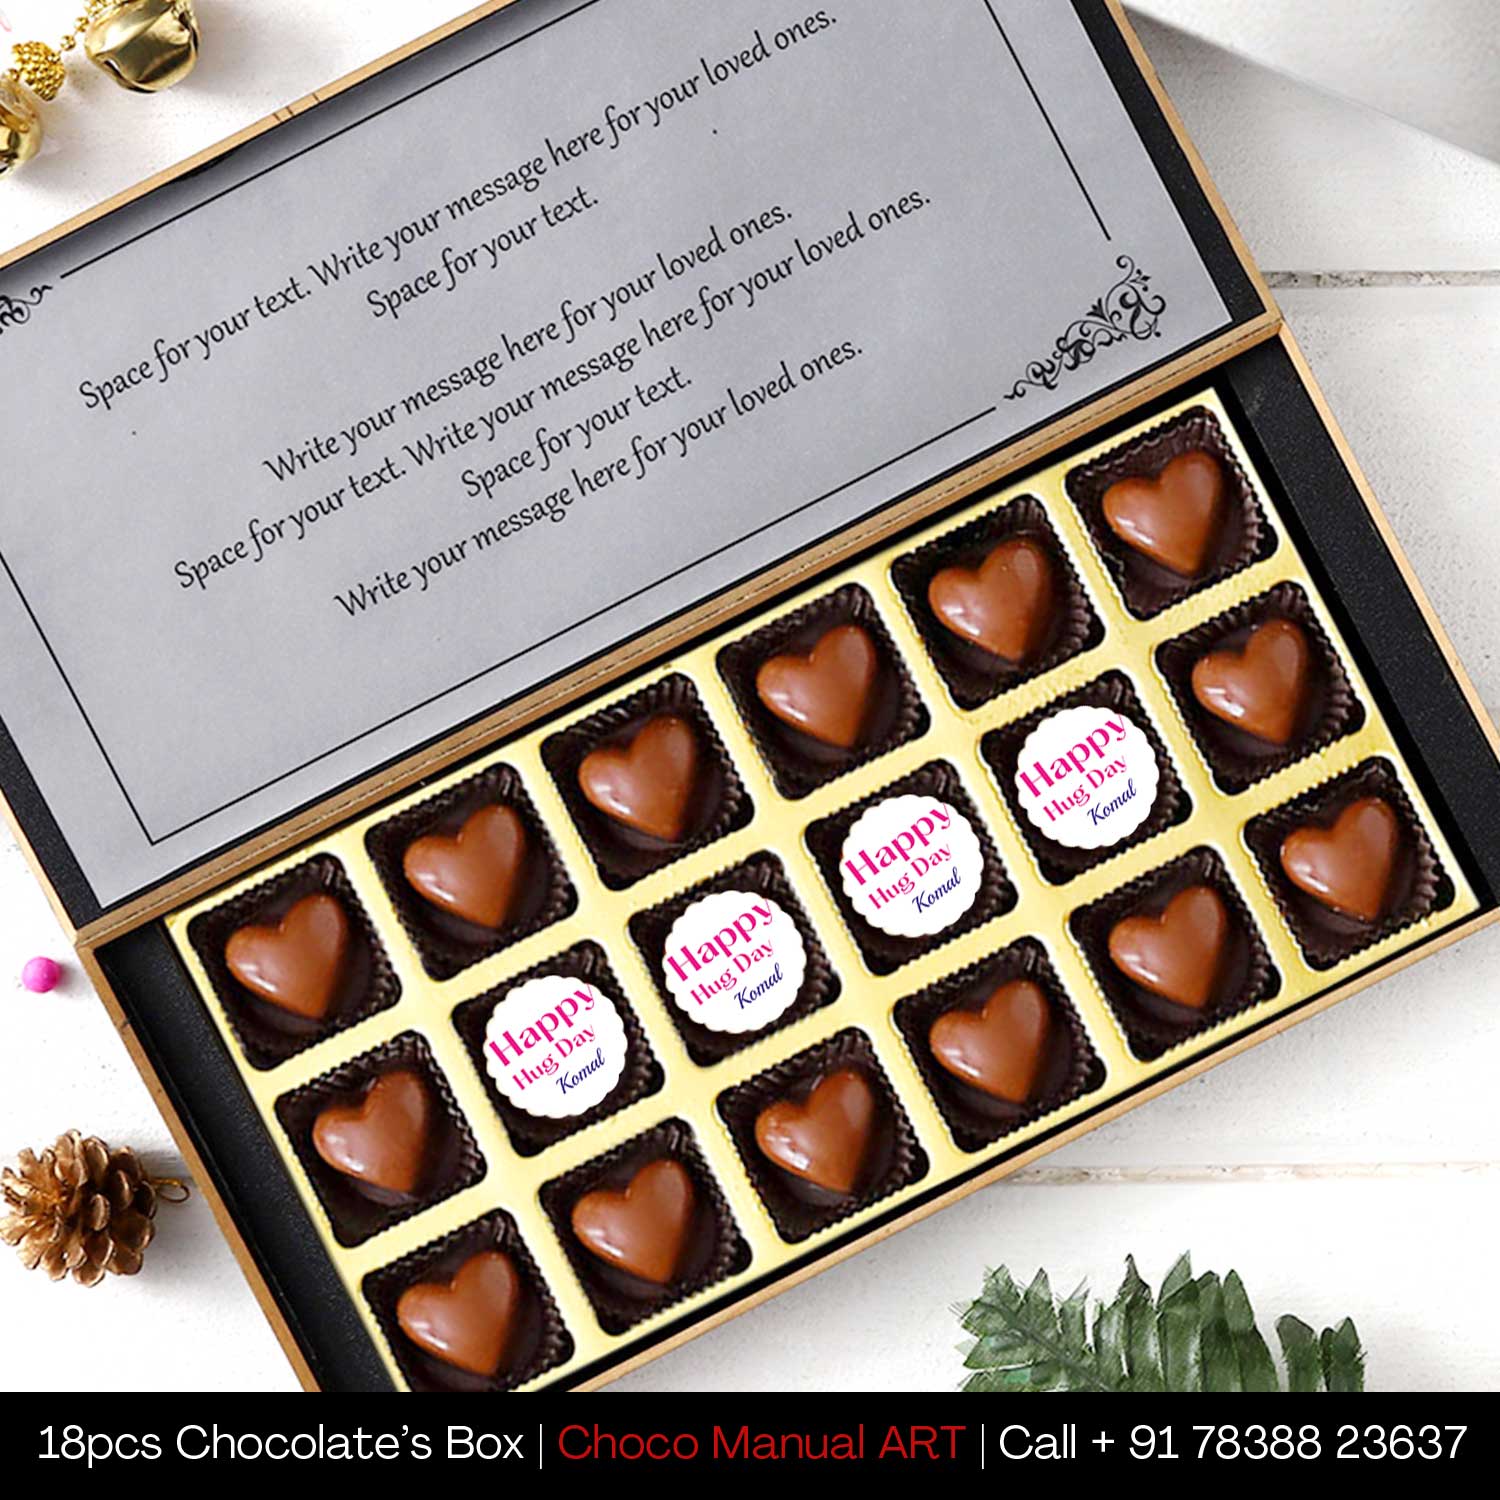 Buy online @399 Hug Day Printed Chocolate with photo/name